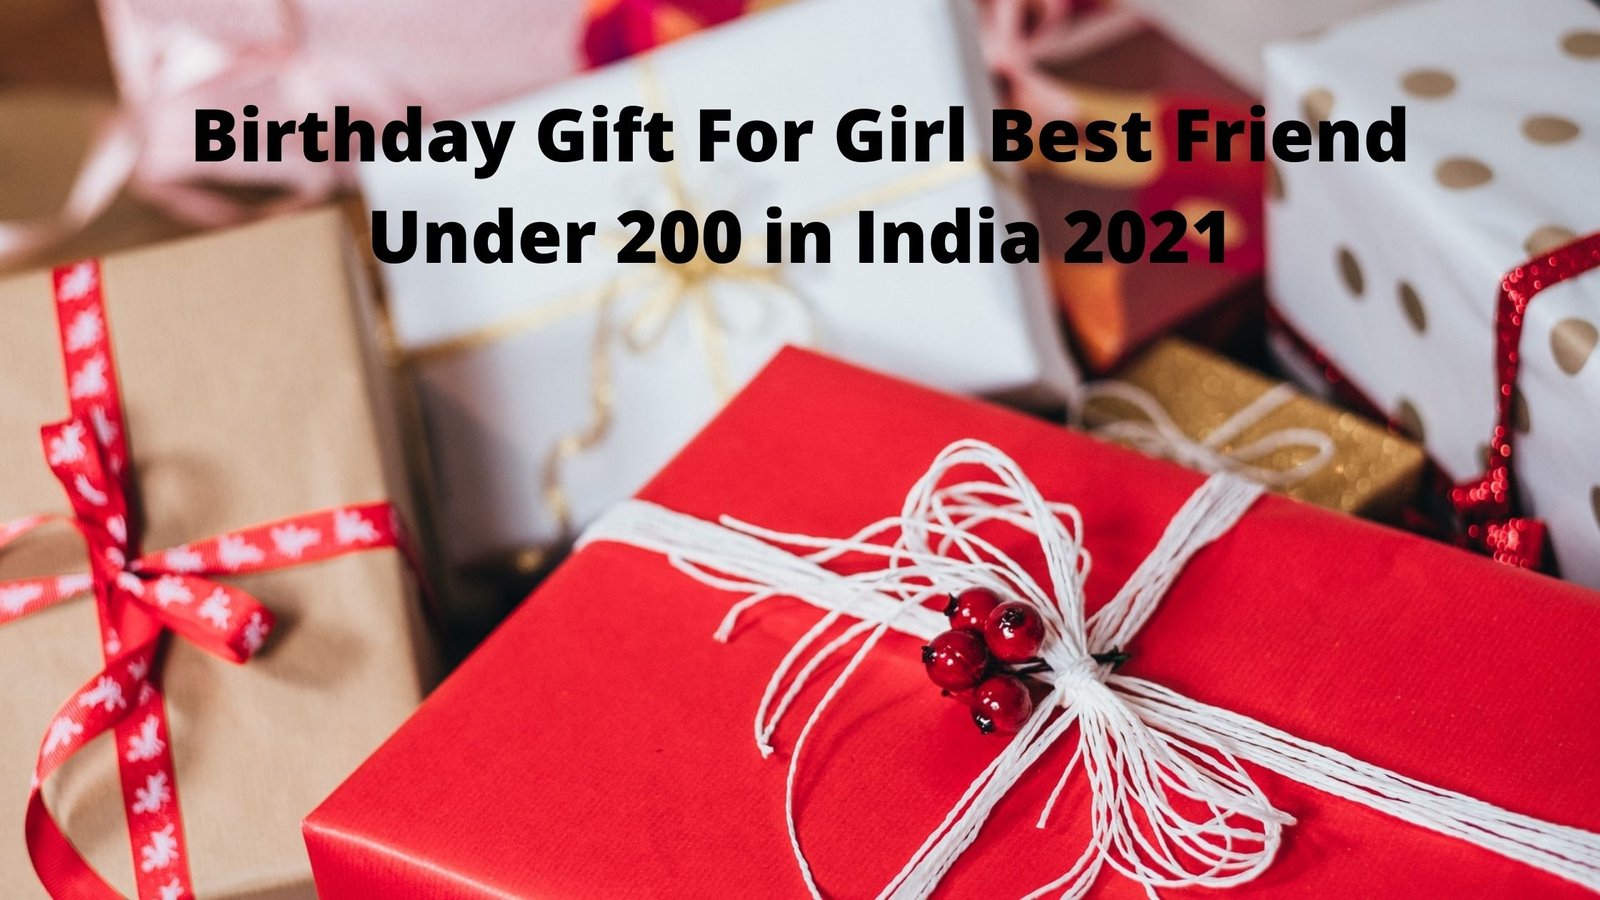 Birthday Gift For Girl Best Friend Under 200 in India 2021